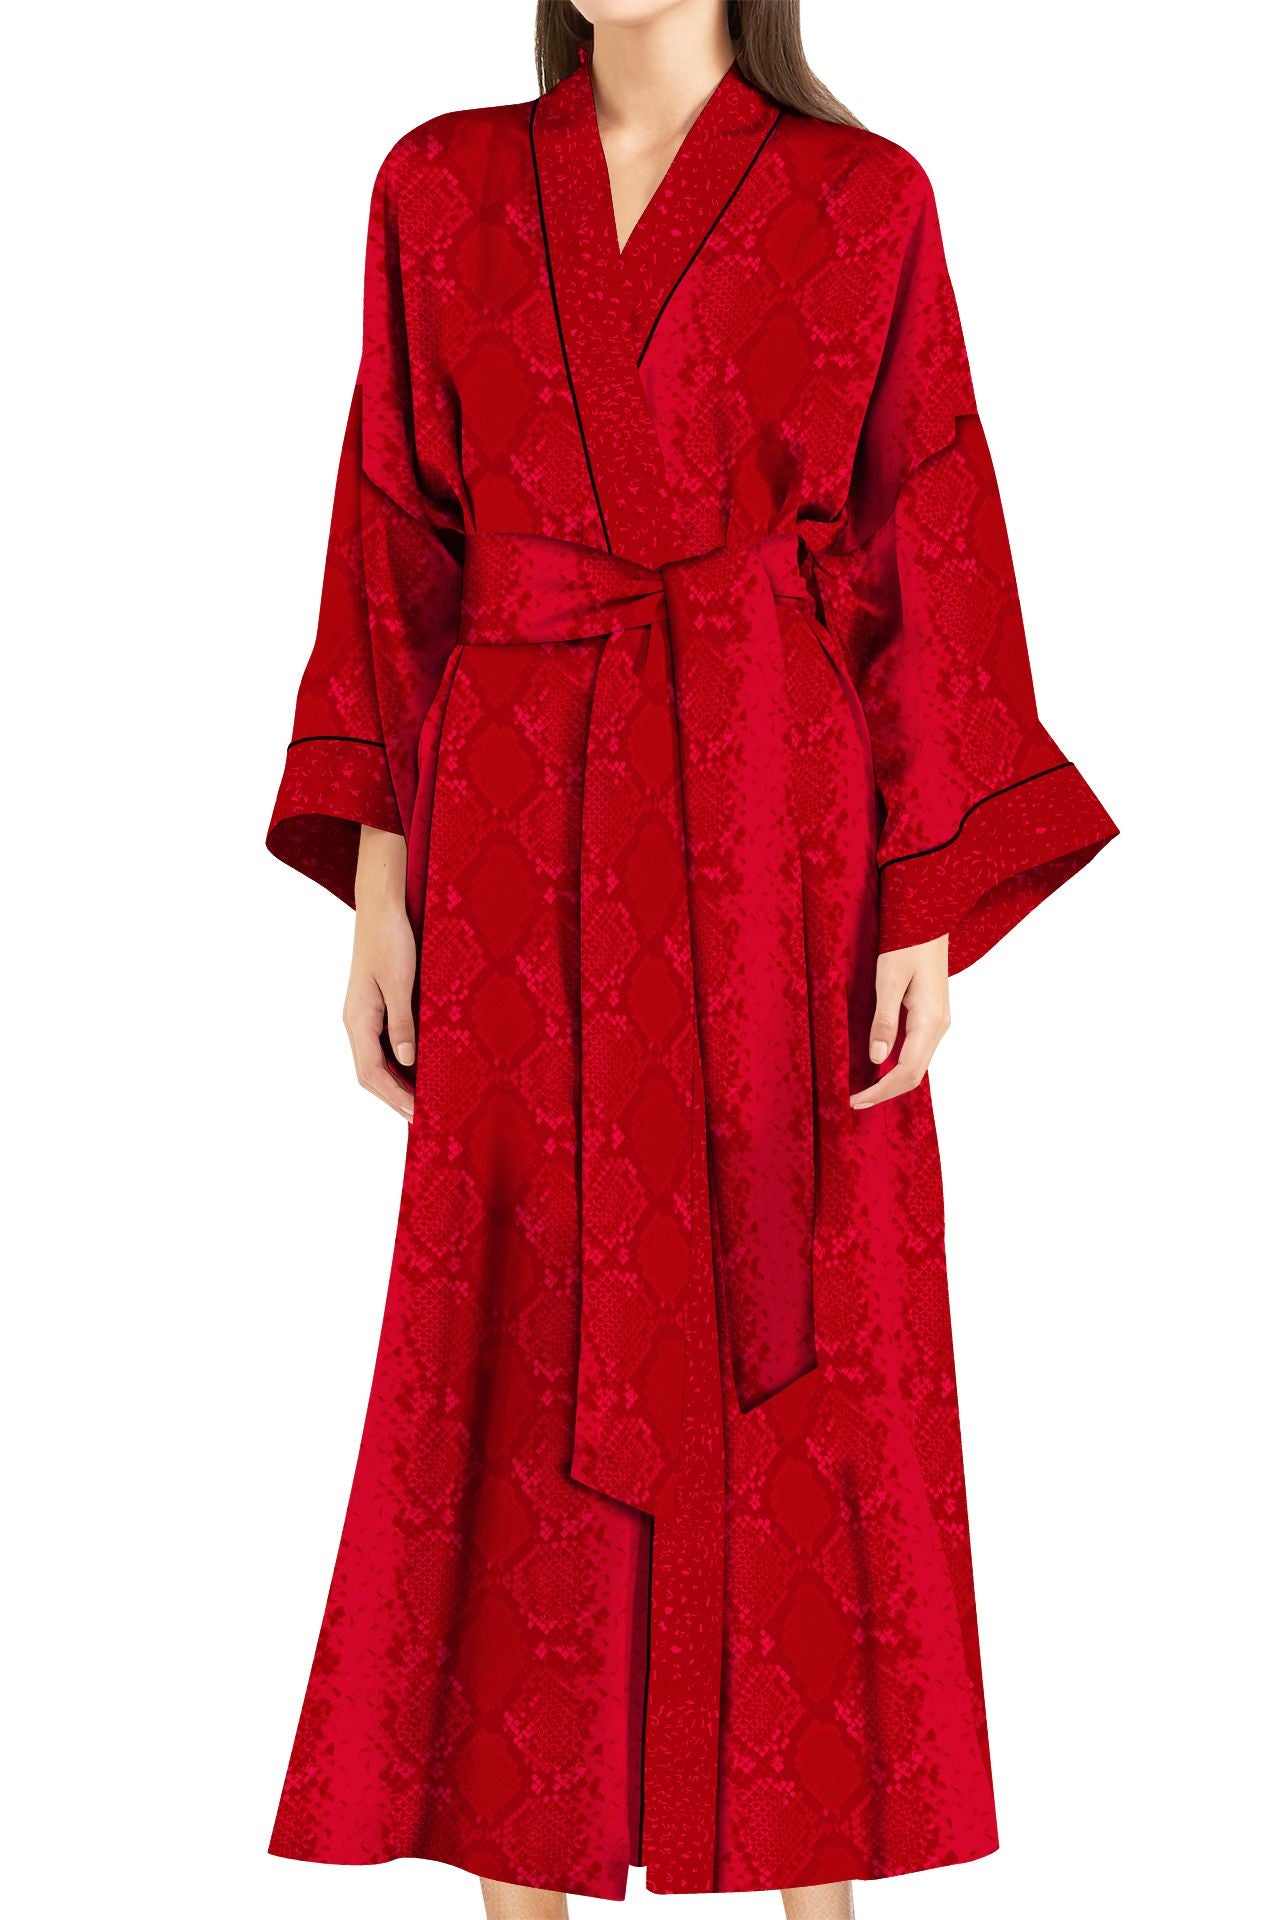 Cupro Kimono Solid Blood Stone Robe in Midi Length